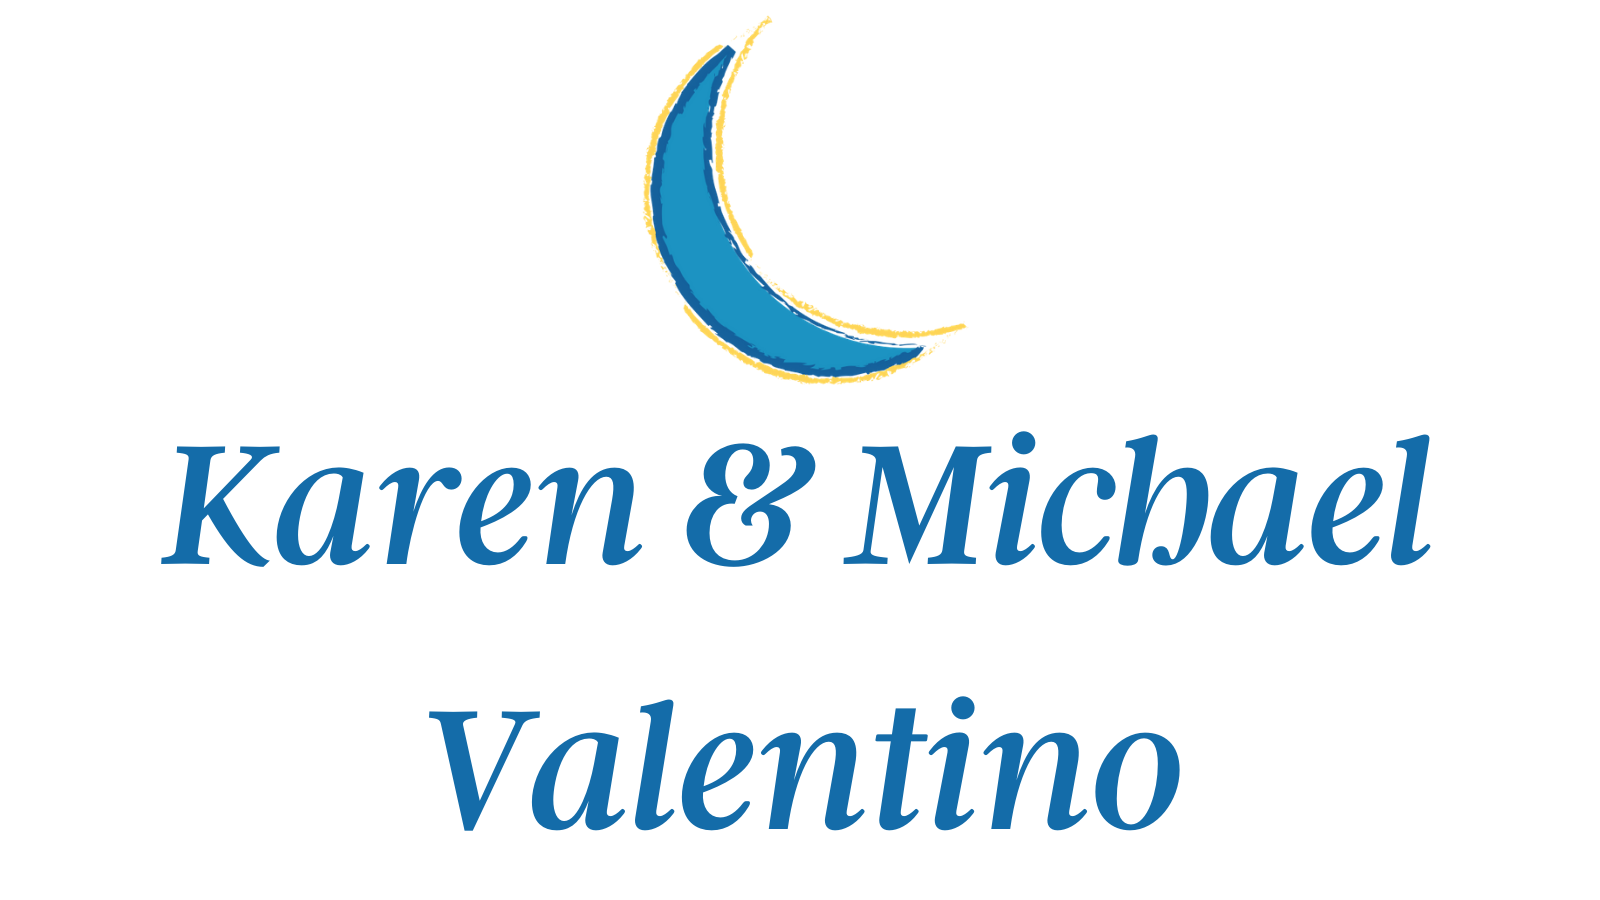 Karen & Michael Valentino